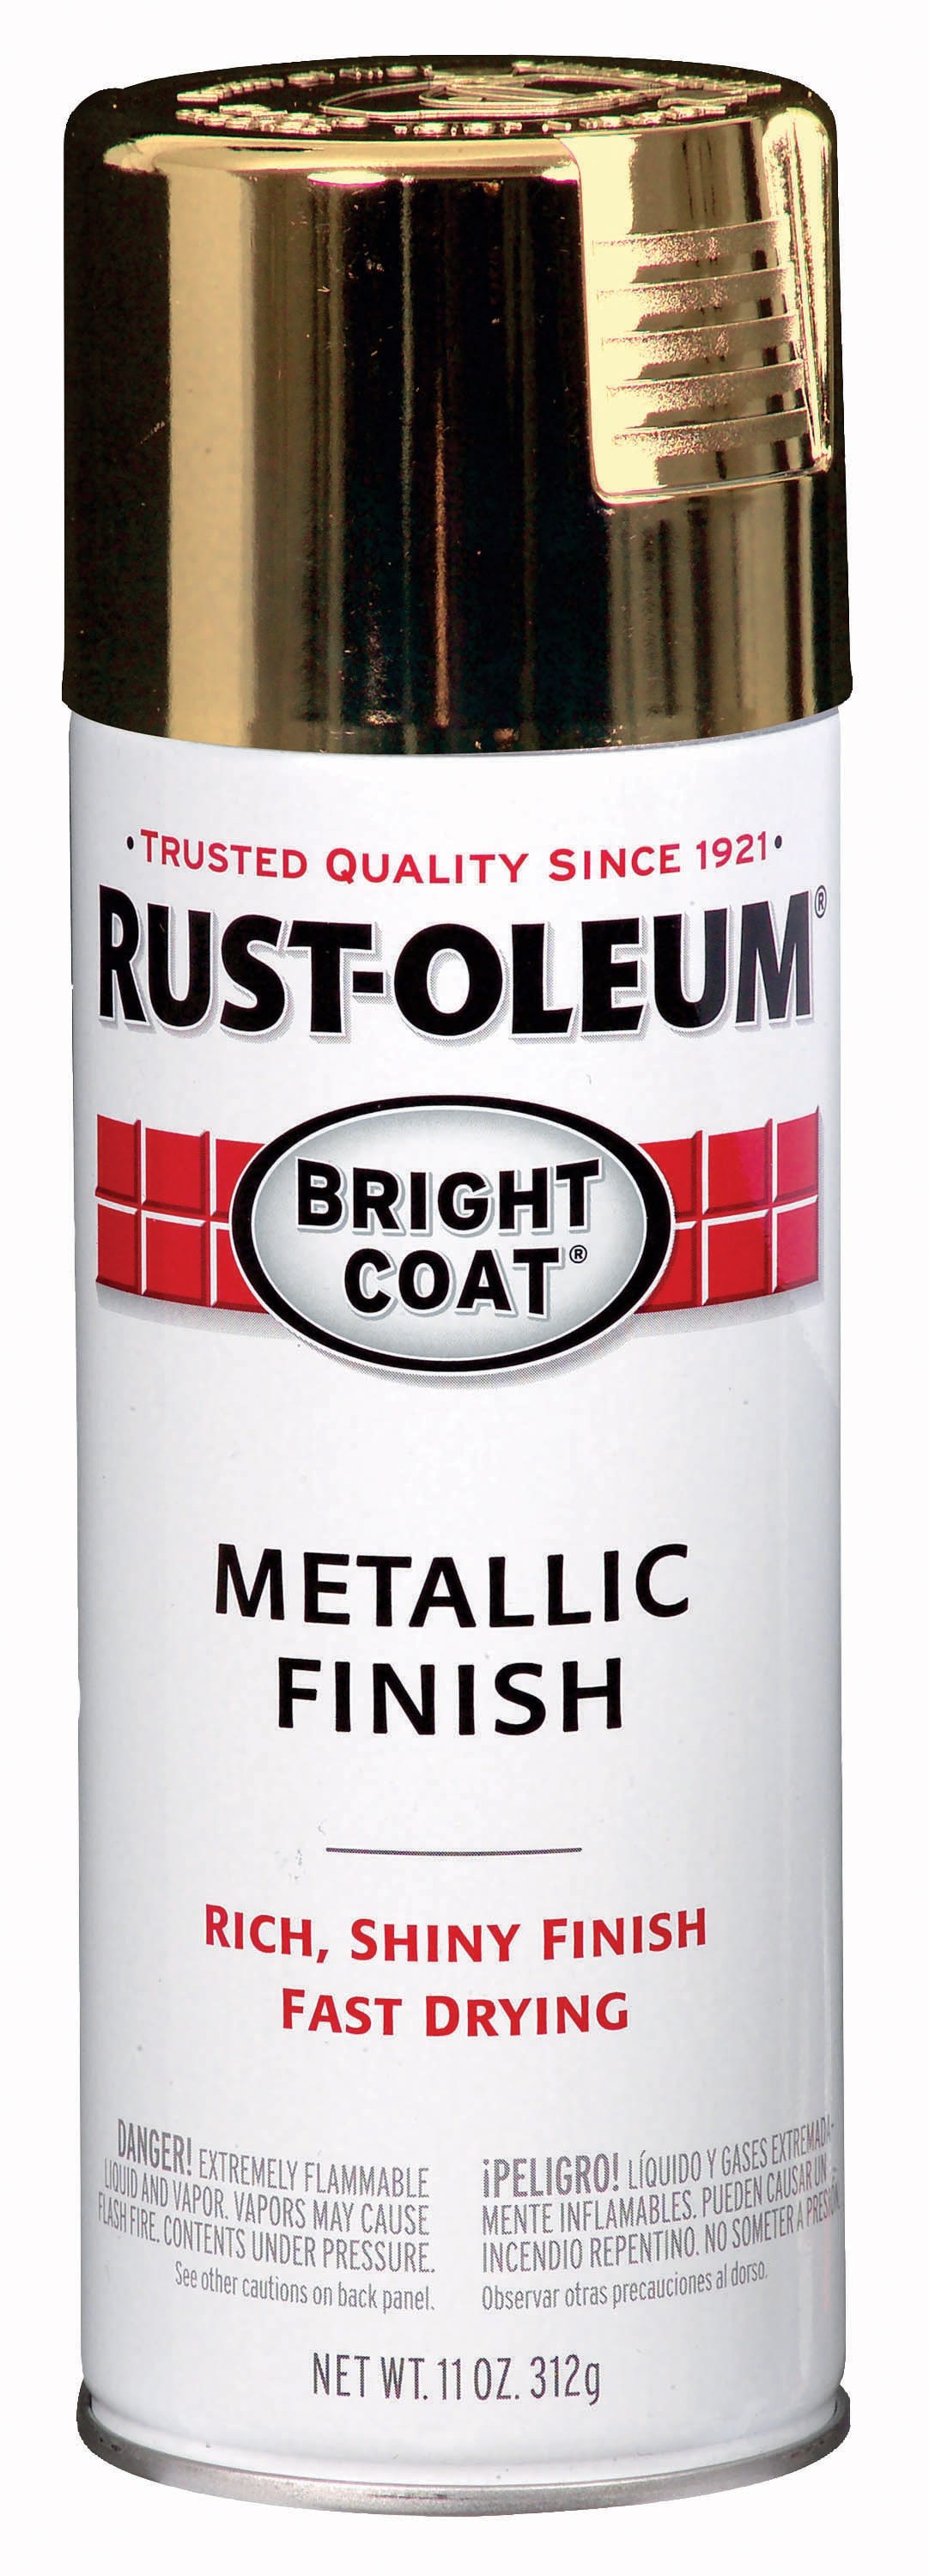 Rust-Oleum 342918-6K Universal All Surface Aged Metallic Spray Paint, 11  oz, Vintage Gold, 6 Pack